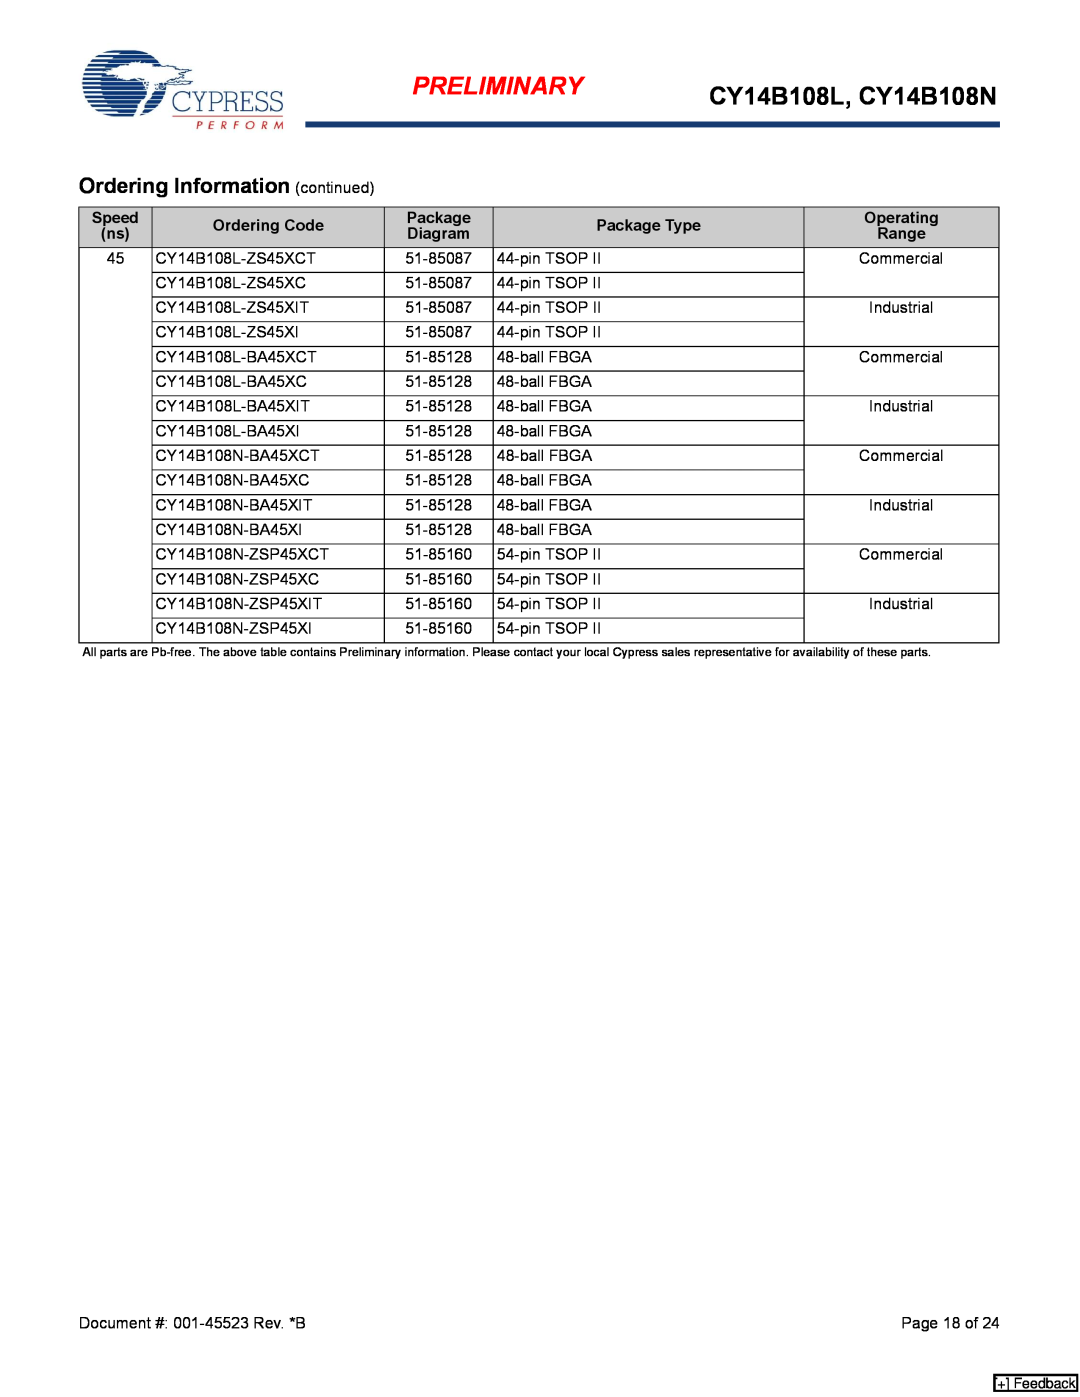 Cypress manual Ordering Information continued, Preliminary, CY14B108L, CY14B108N 